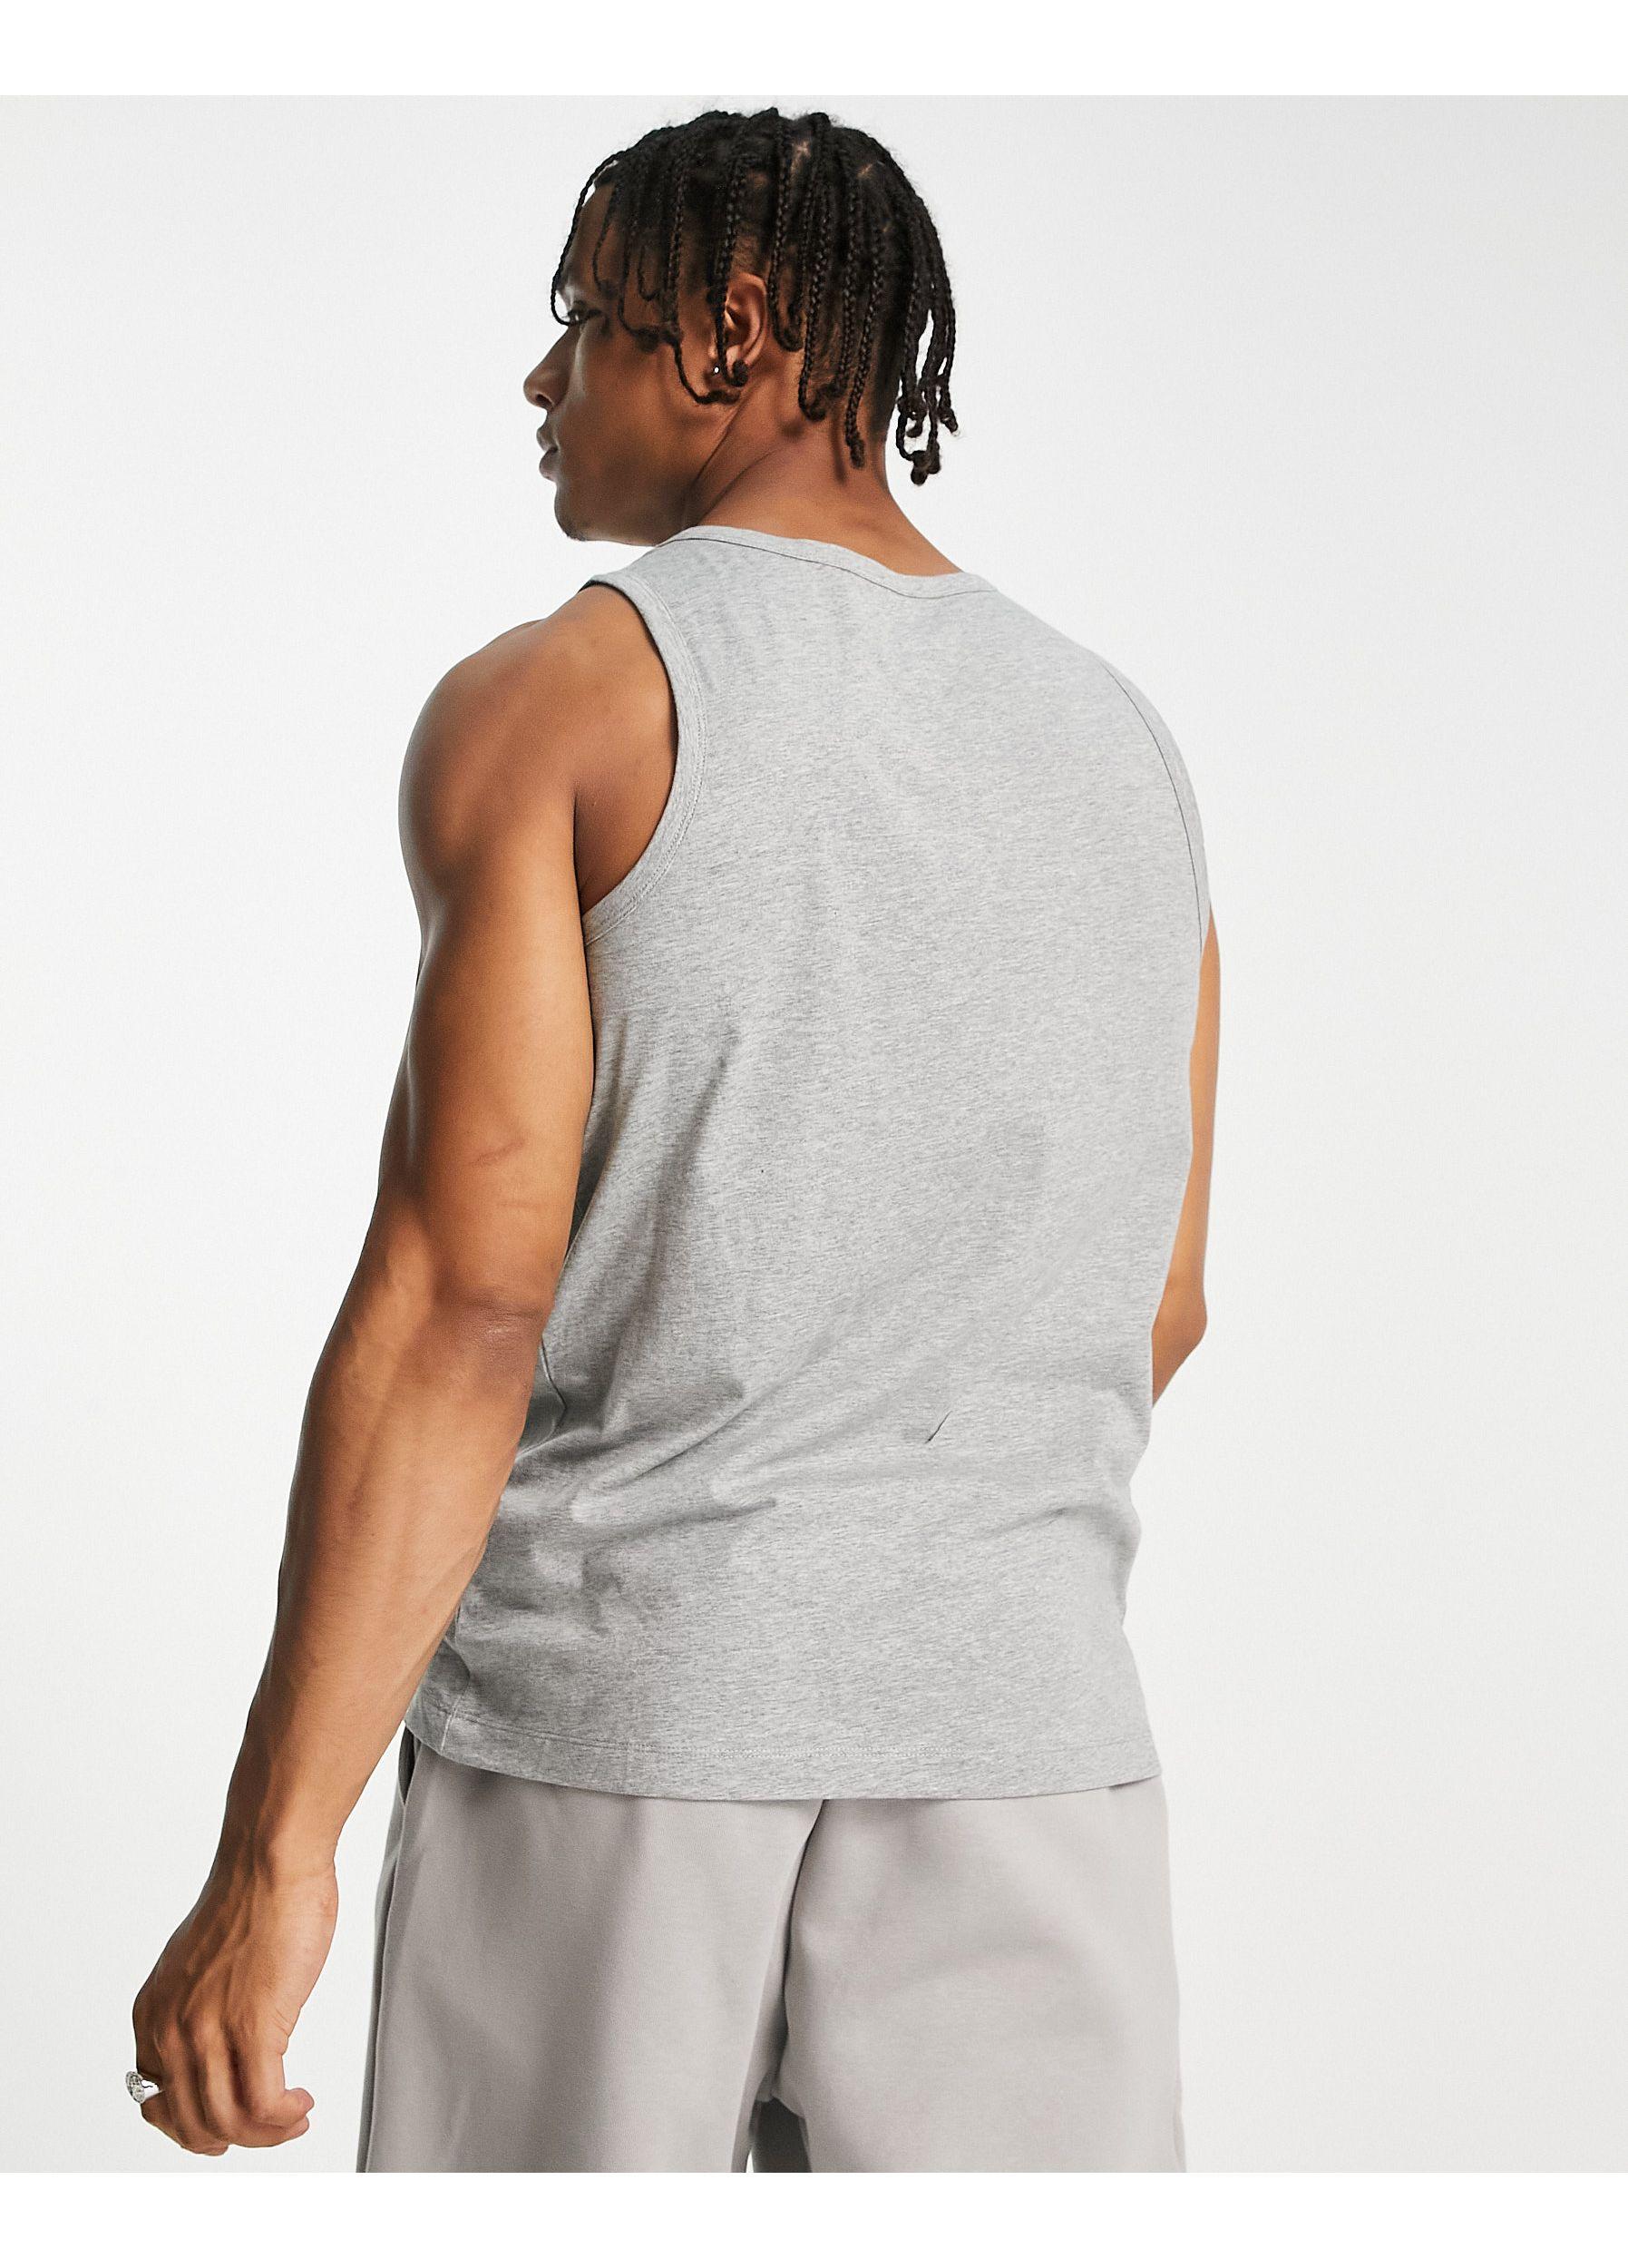 Nike Icon Futura Logo Tank Top in Gray for Men | Lyst